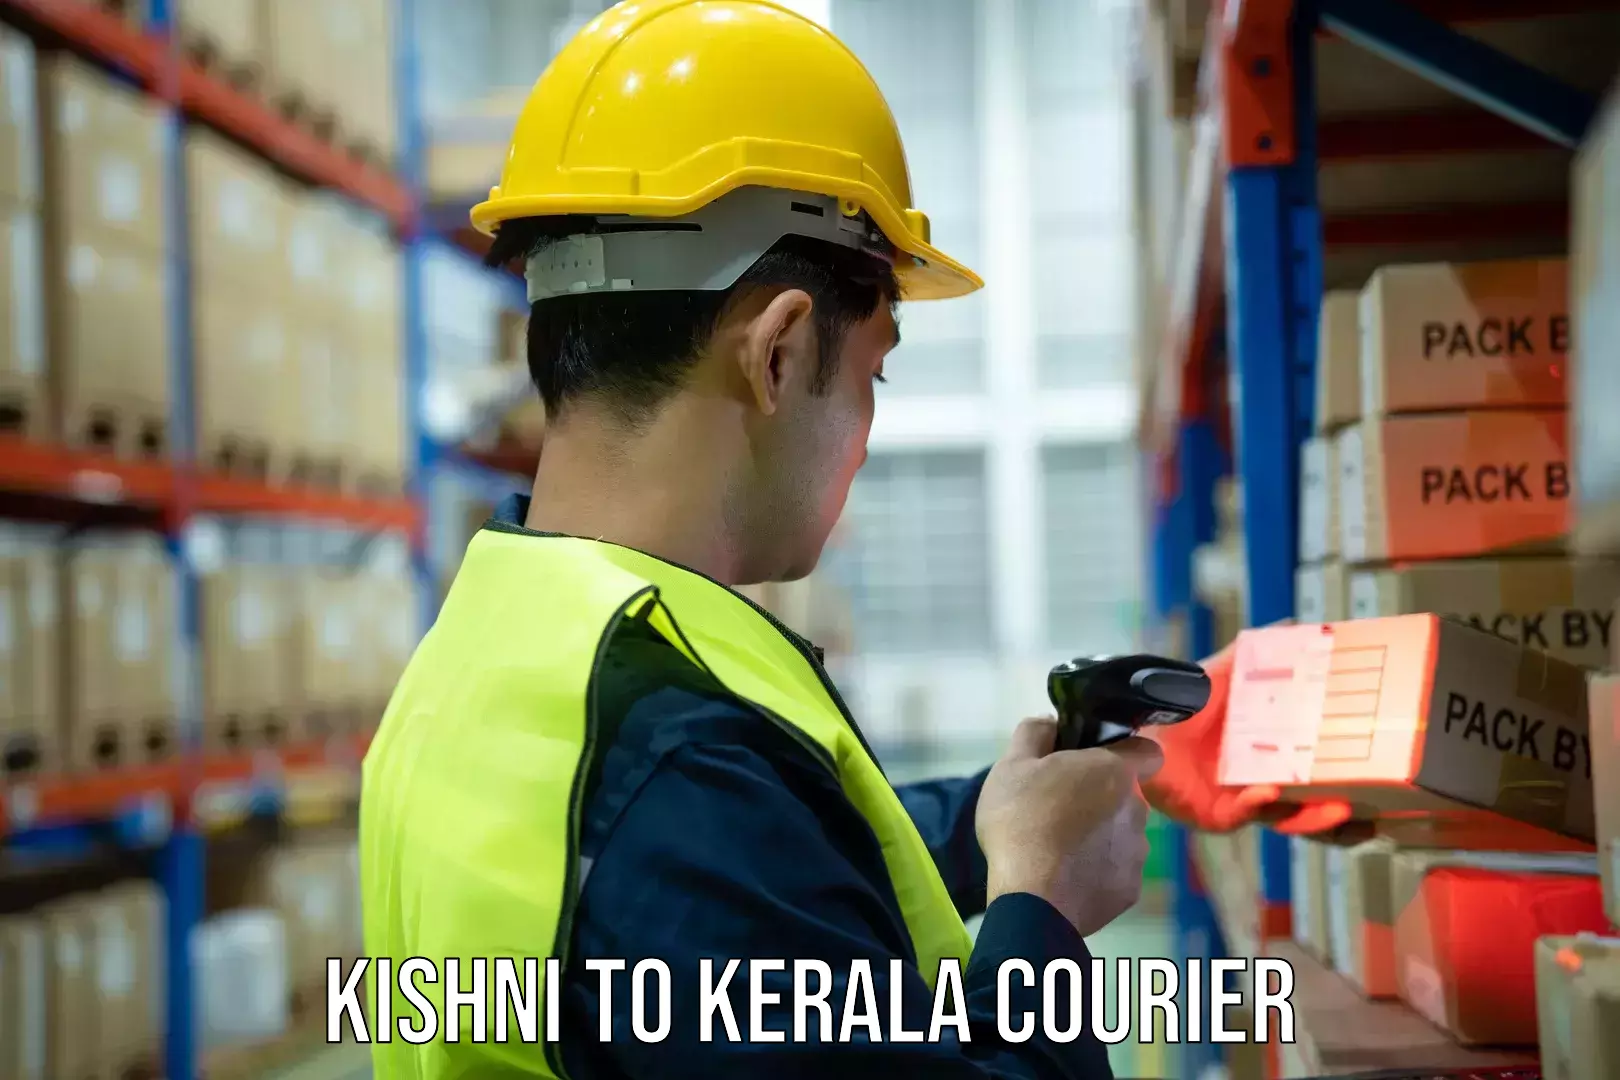 Courier service innovation Kishni to Kerala